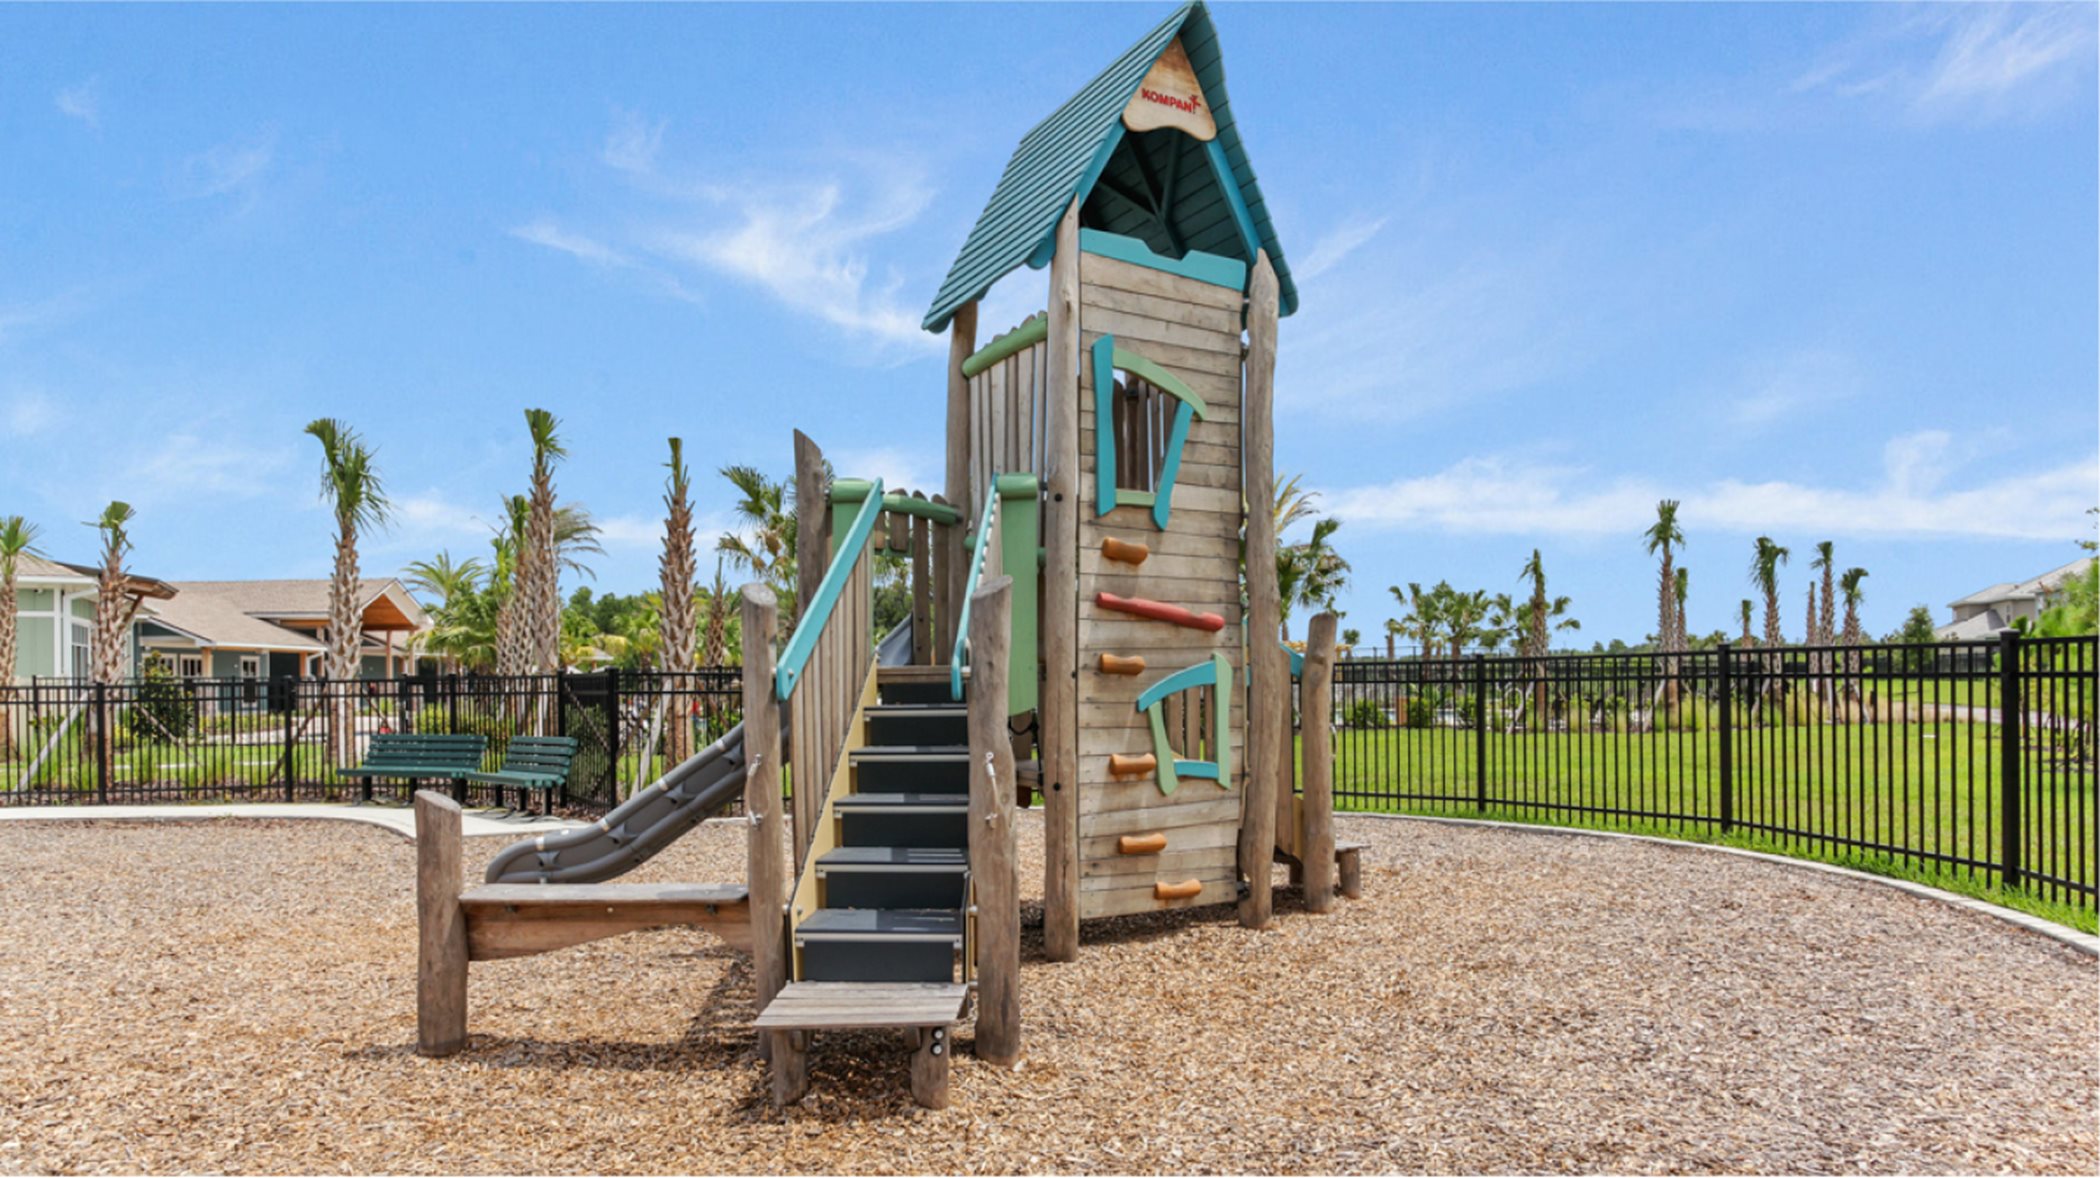 Storey Park Community Playground